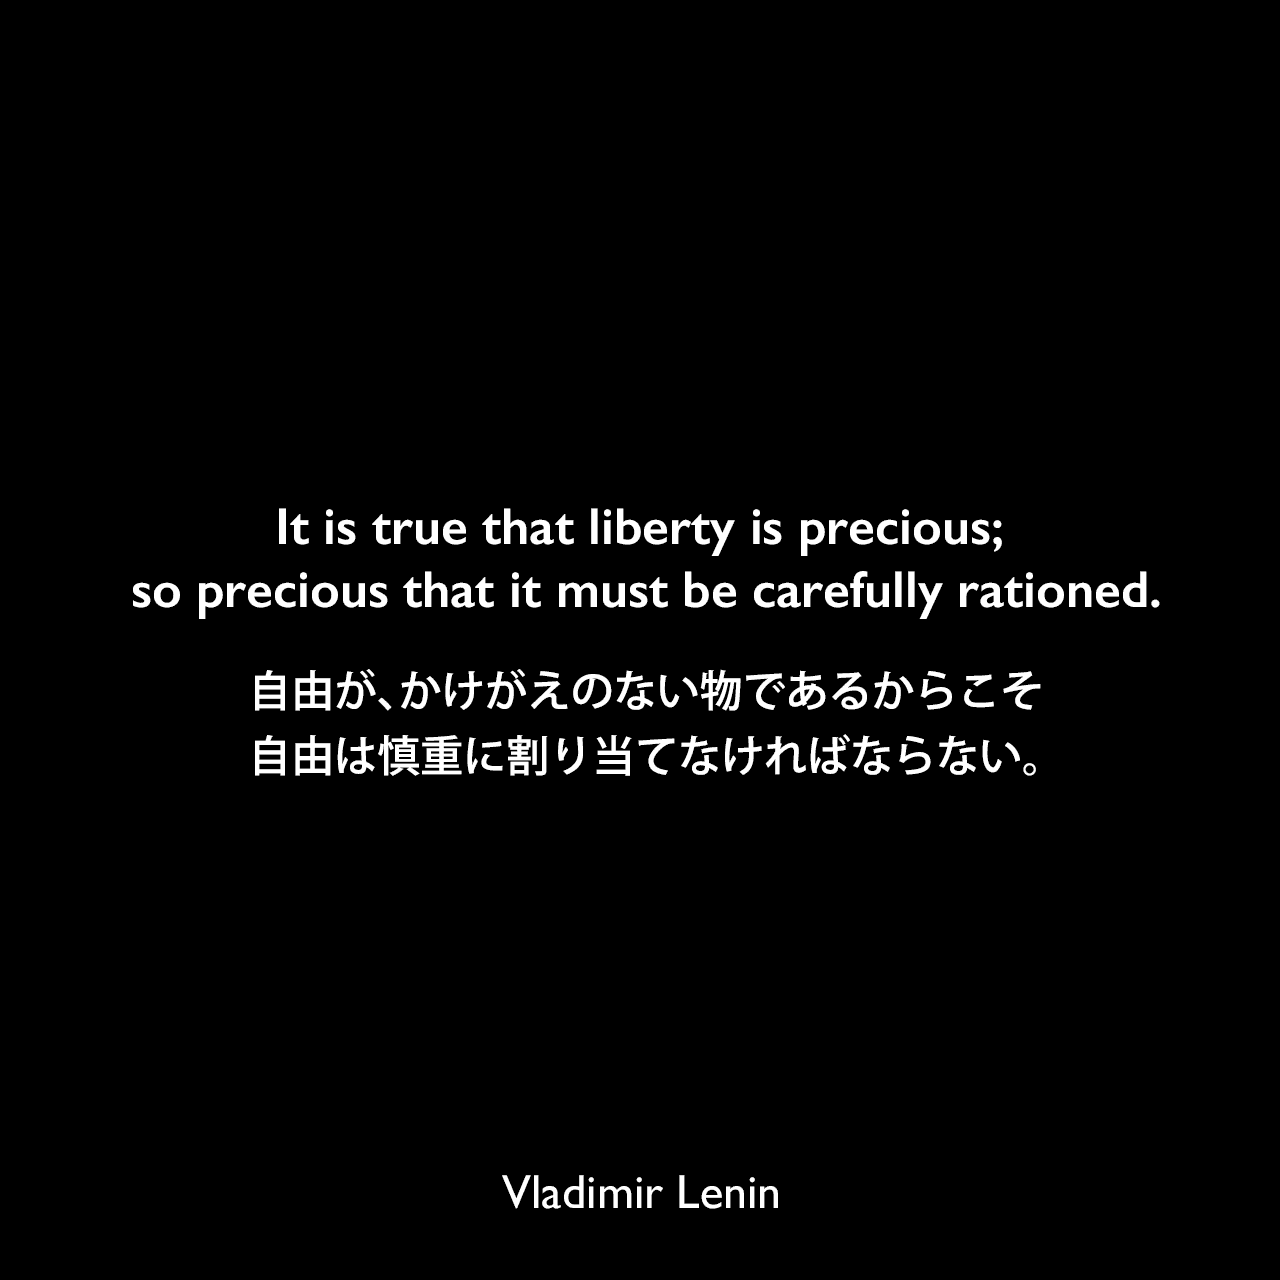 It is true that liberty is precious; so precious that it must be carefully rationed.自由が、かけがえのない物であるからこそ、自由は慎重に割り当てなければならない。Vladimir Lenin